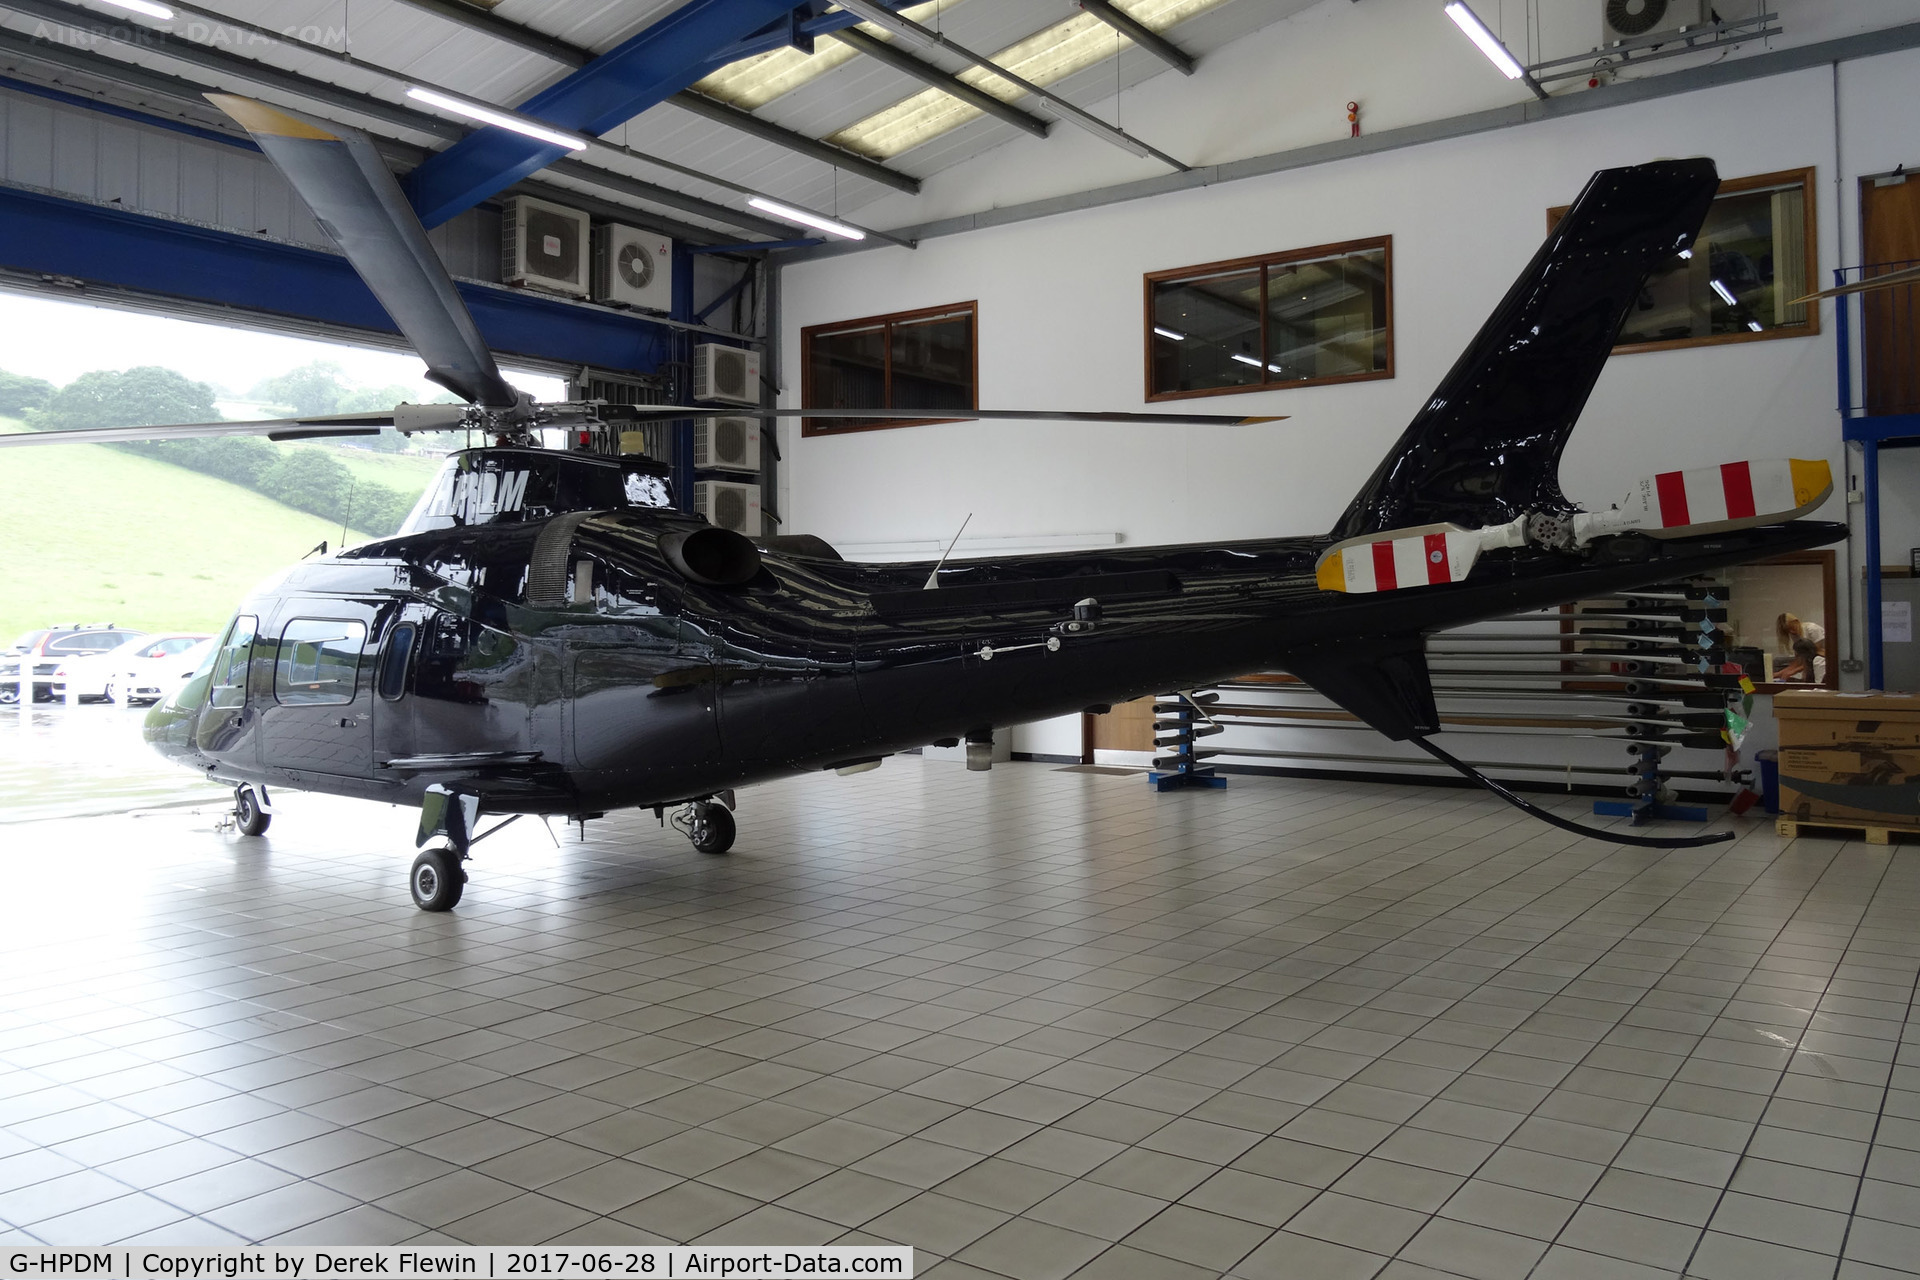 G-HPDM, 2003 Agusta A-109E Power C/N 11216, A109e E Power, Adonby International Ltd Biggin Hill Kent based, Previously G-DDPF.